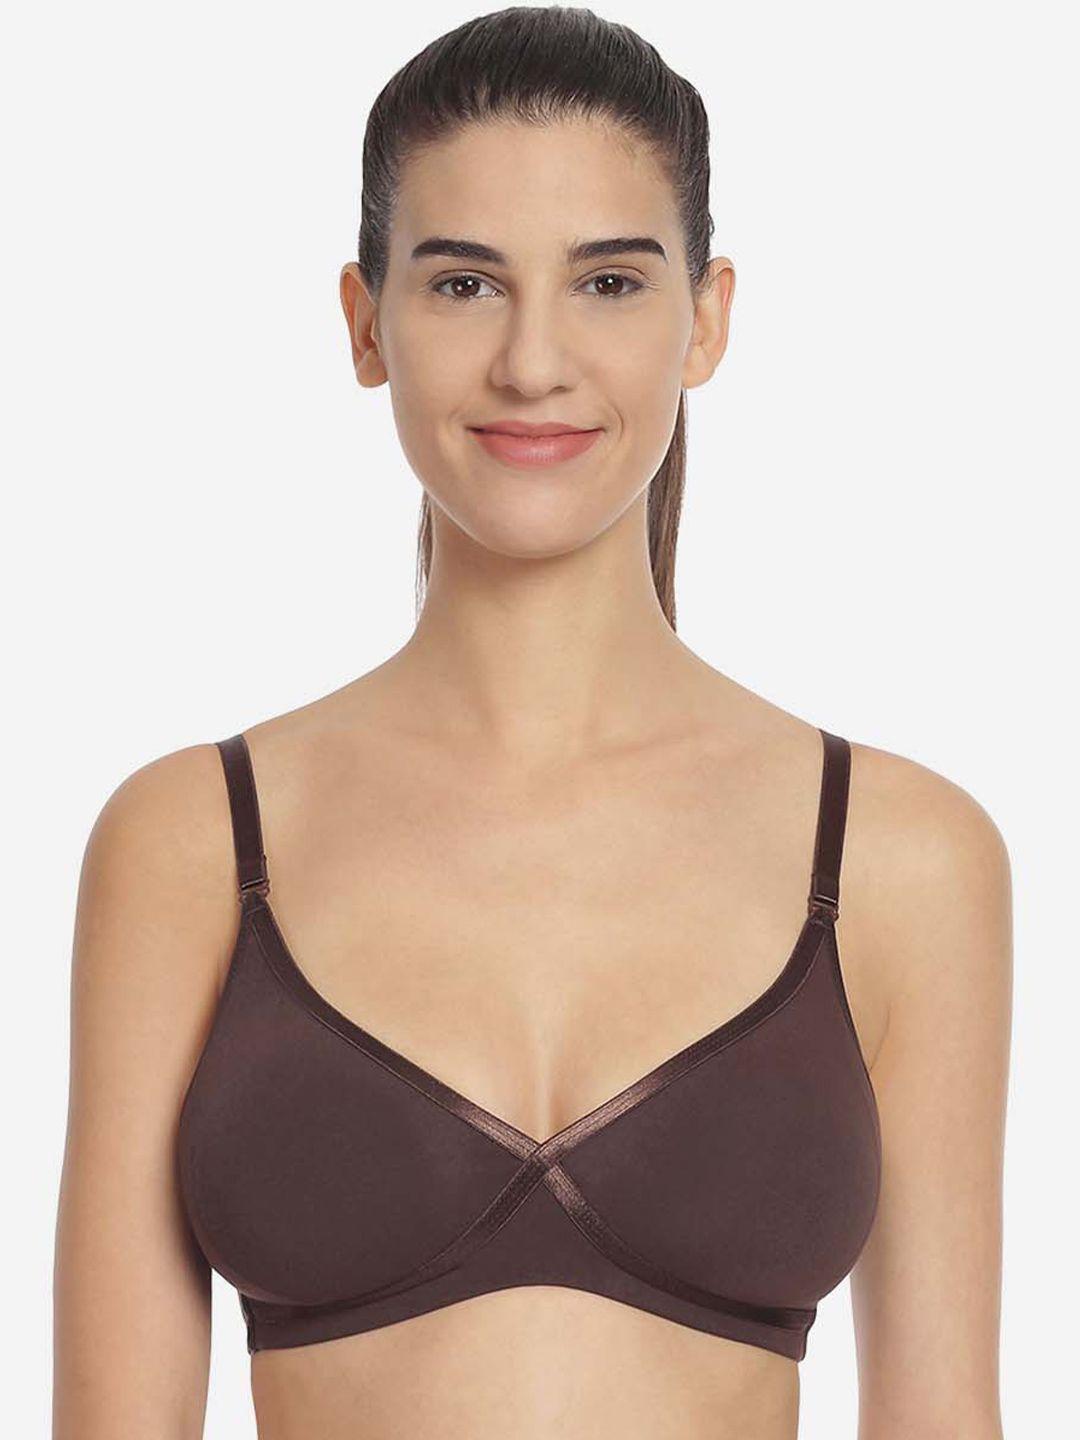 soie brown non-padded non-wired bra